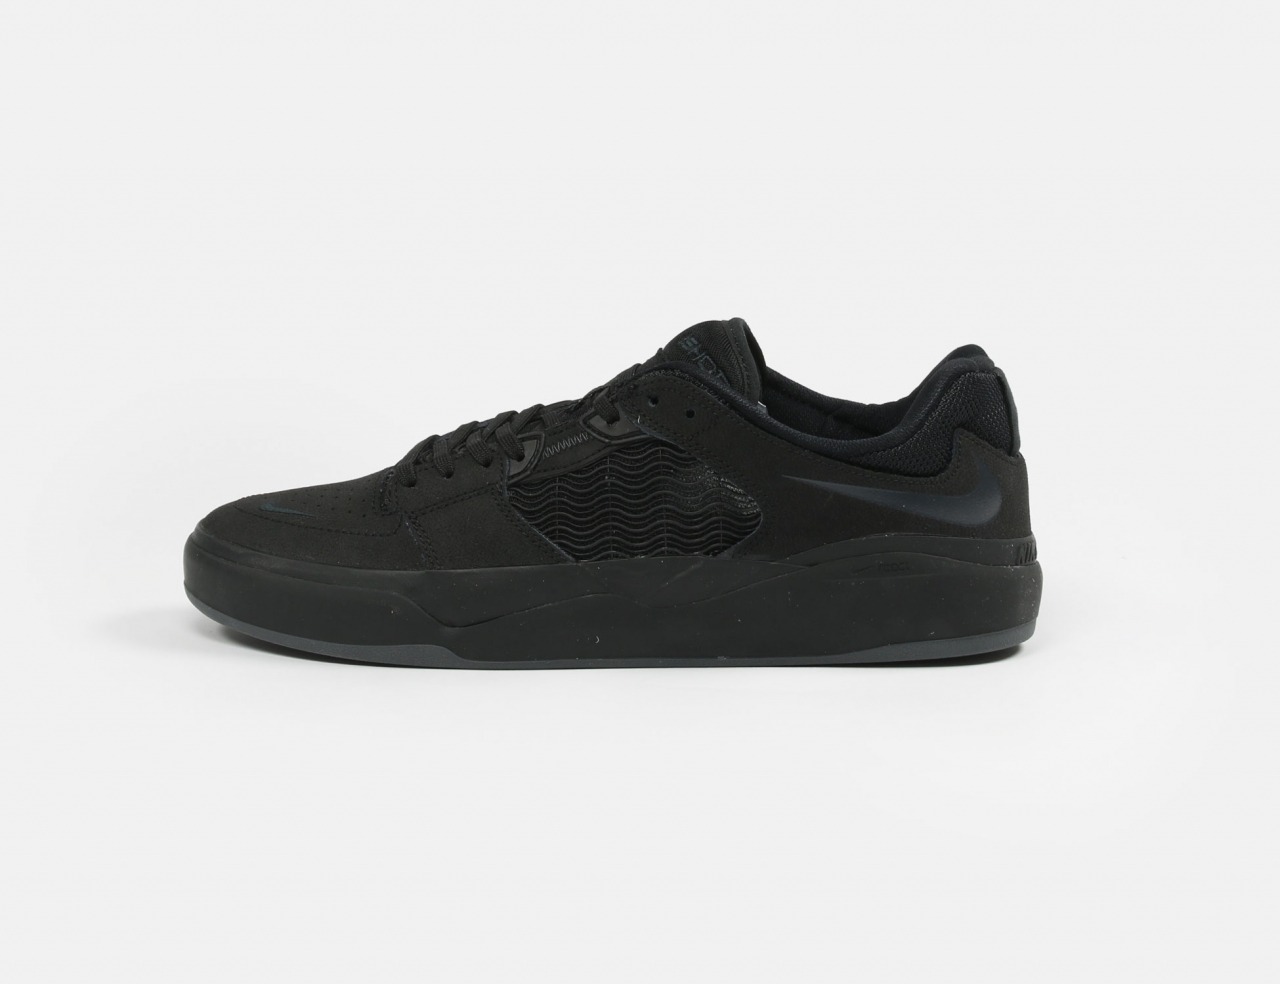 Nike SB Ishod Premium Leather - Black / Black